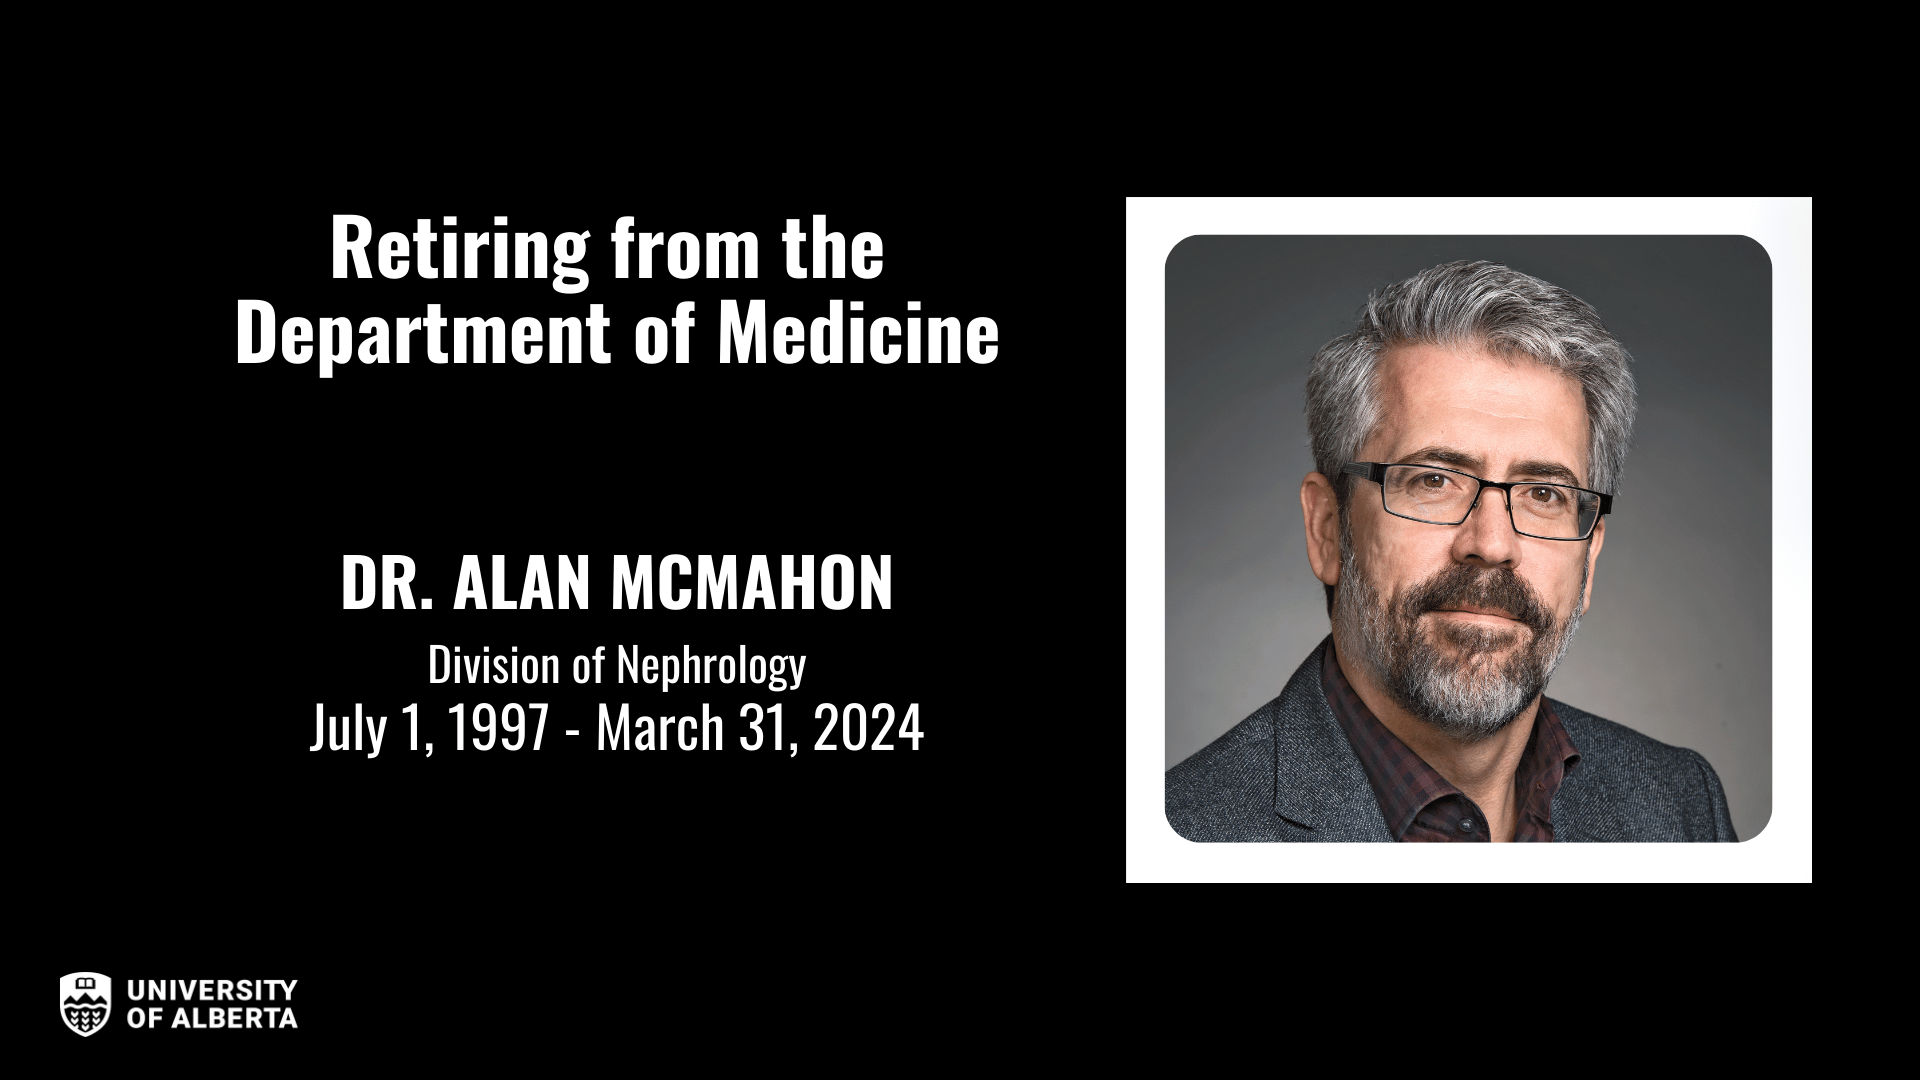 Dr. Alan McMahon